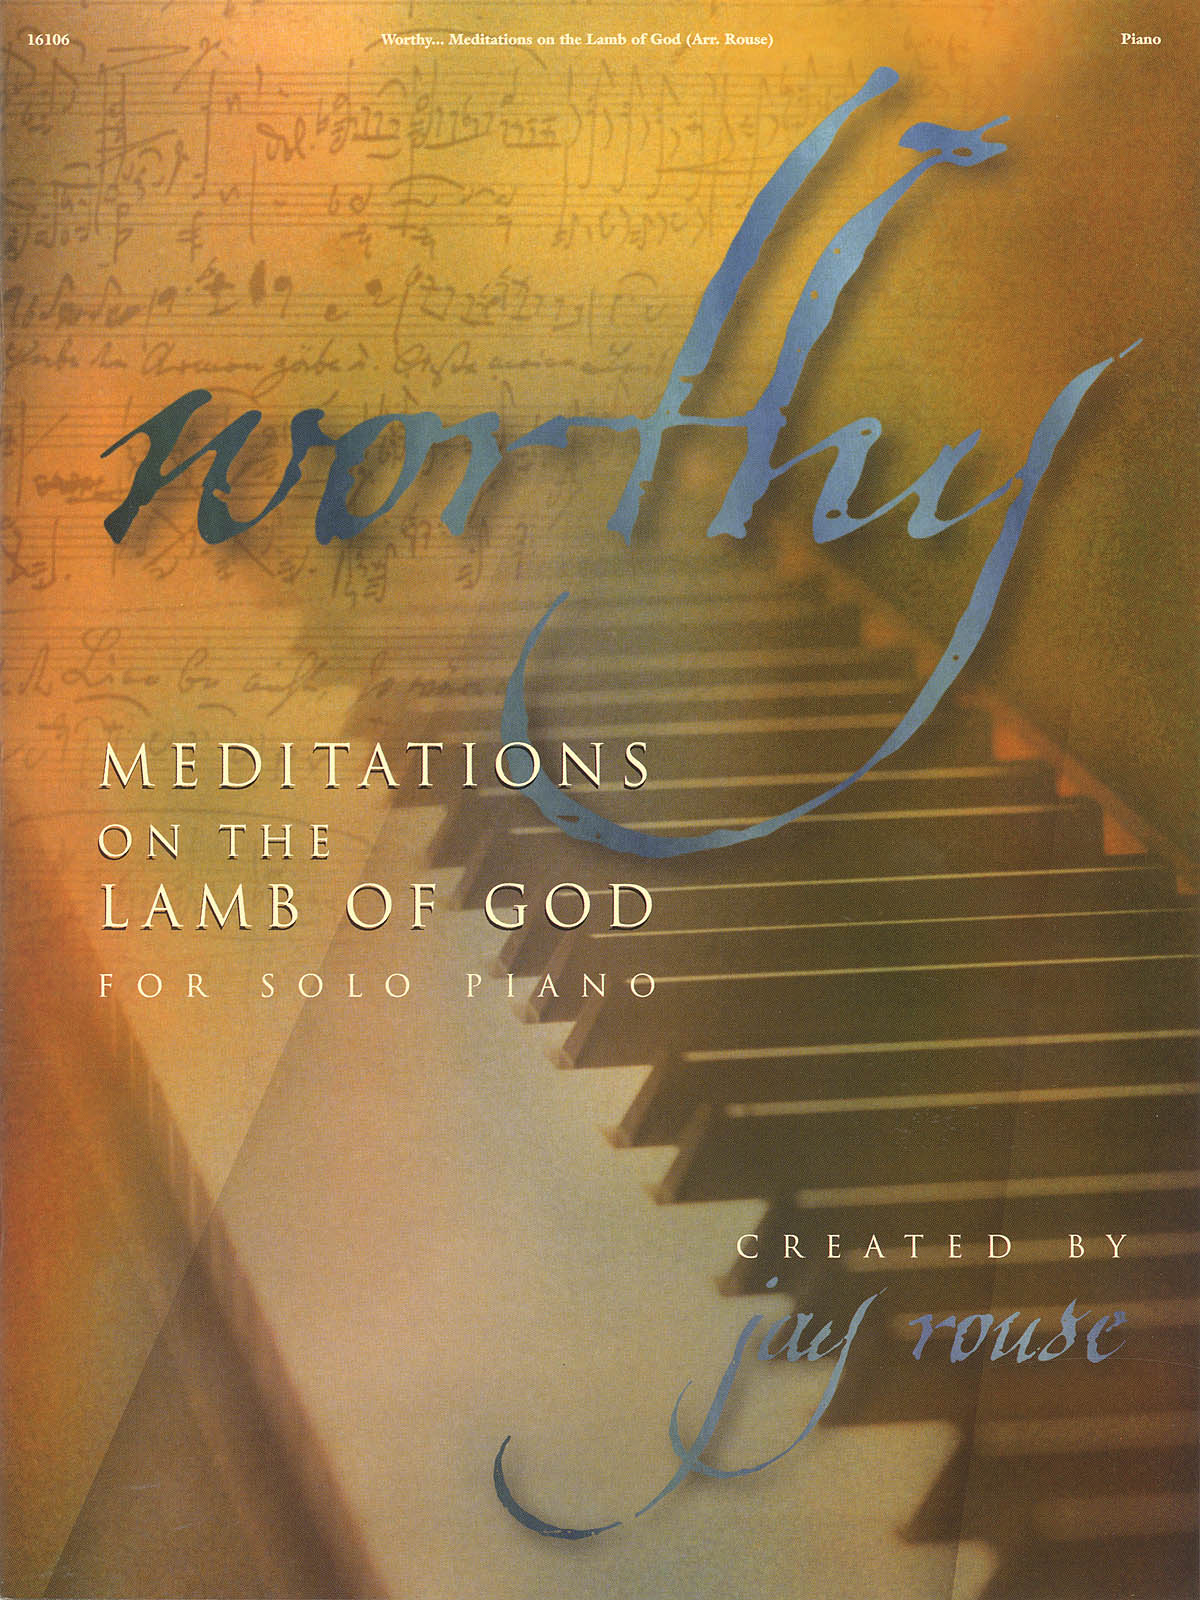 Worthy (Meditations on the Lamb of God fur Solo Piano)